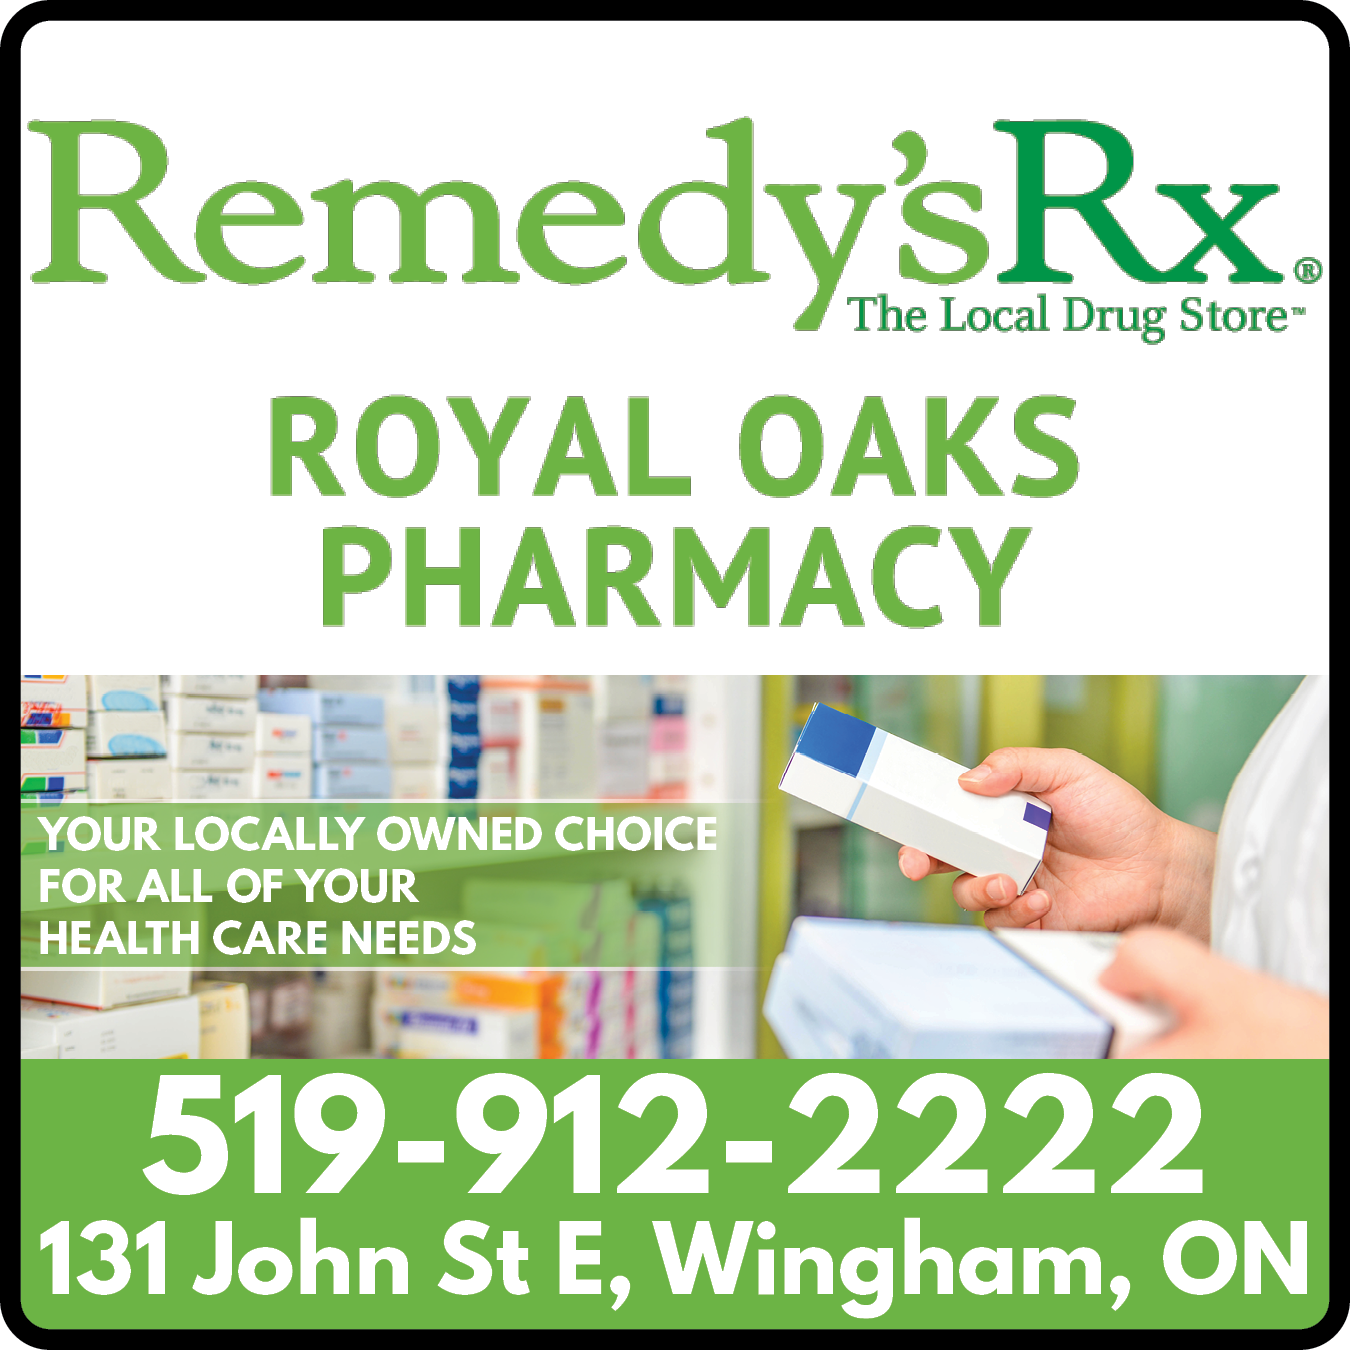 Royal Oaks Remedys RX